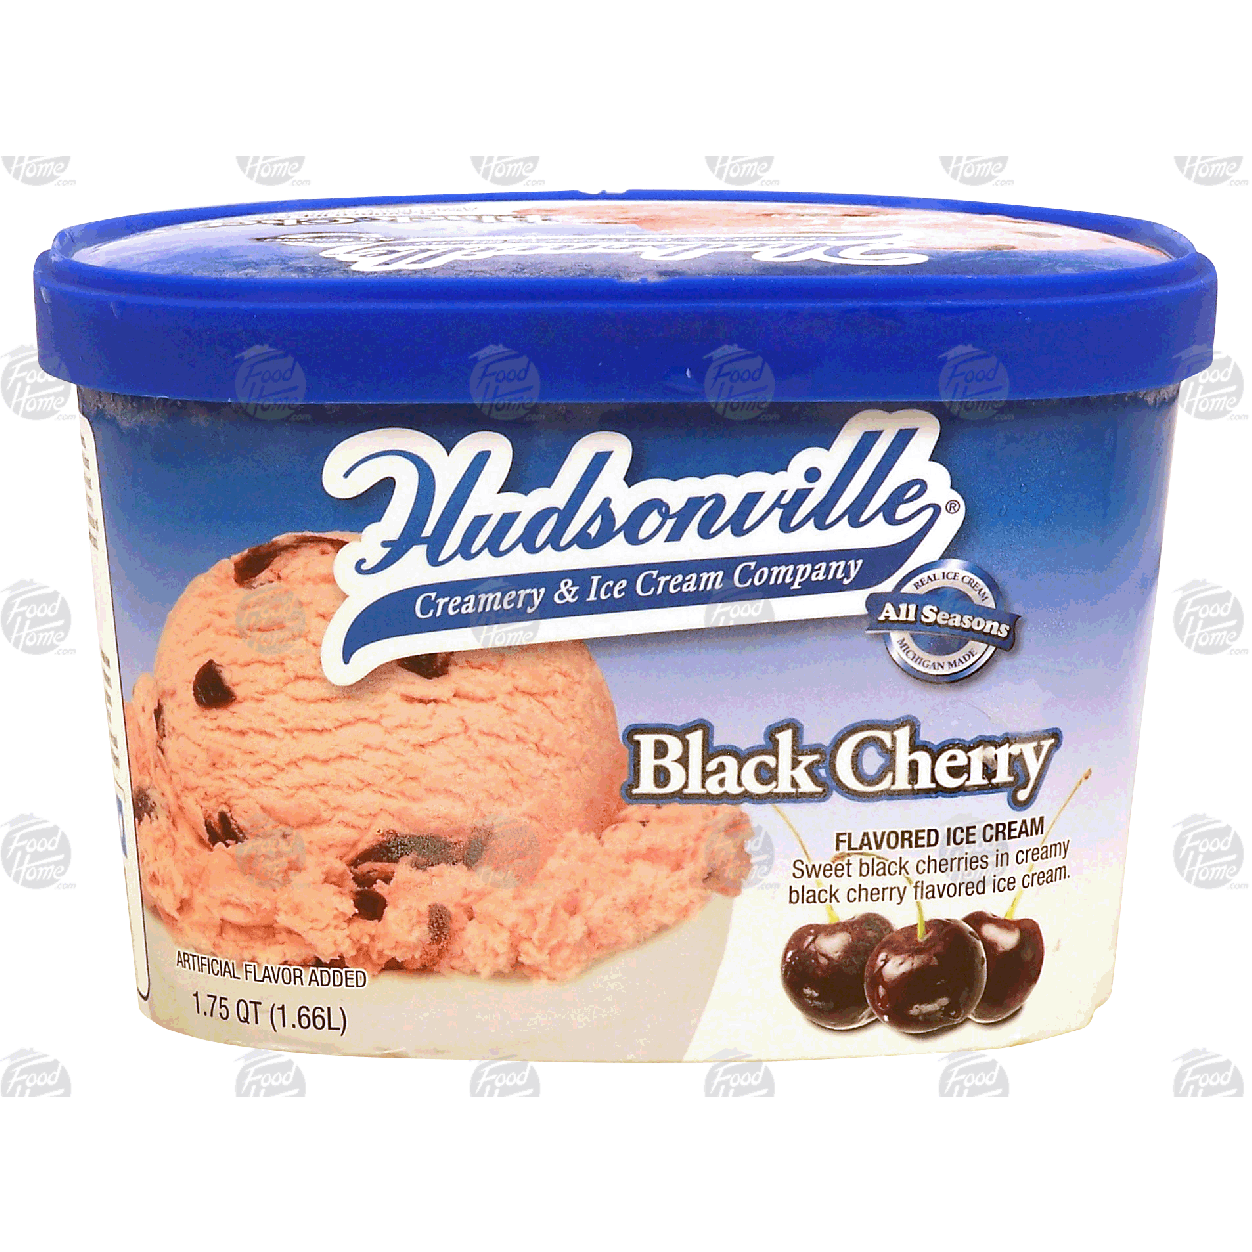 Hudsonville Black Cherry Flavored Ice Cream 175 Qt Ice Cream Fruit Flavor Bars Frozen 1617